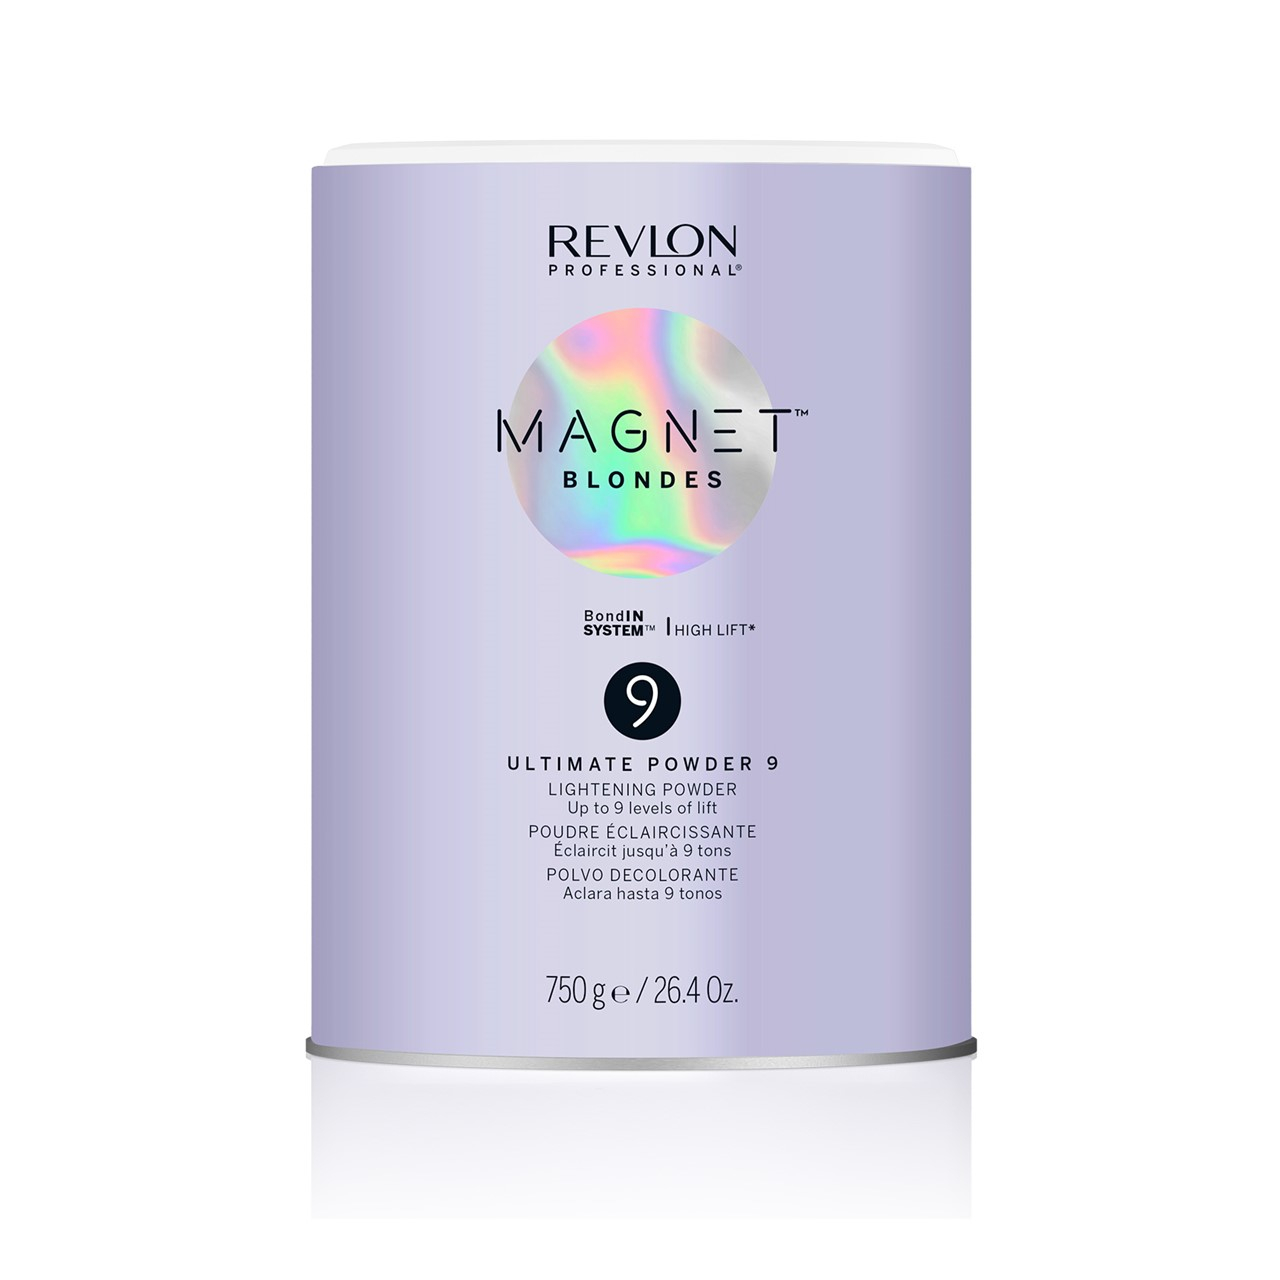 Revlon Professional Magnet Blondes Ultimate Powder 9 750g (26.46oz)